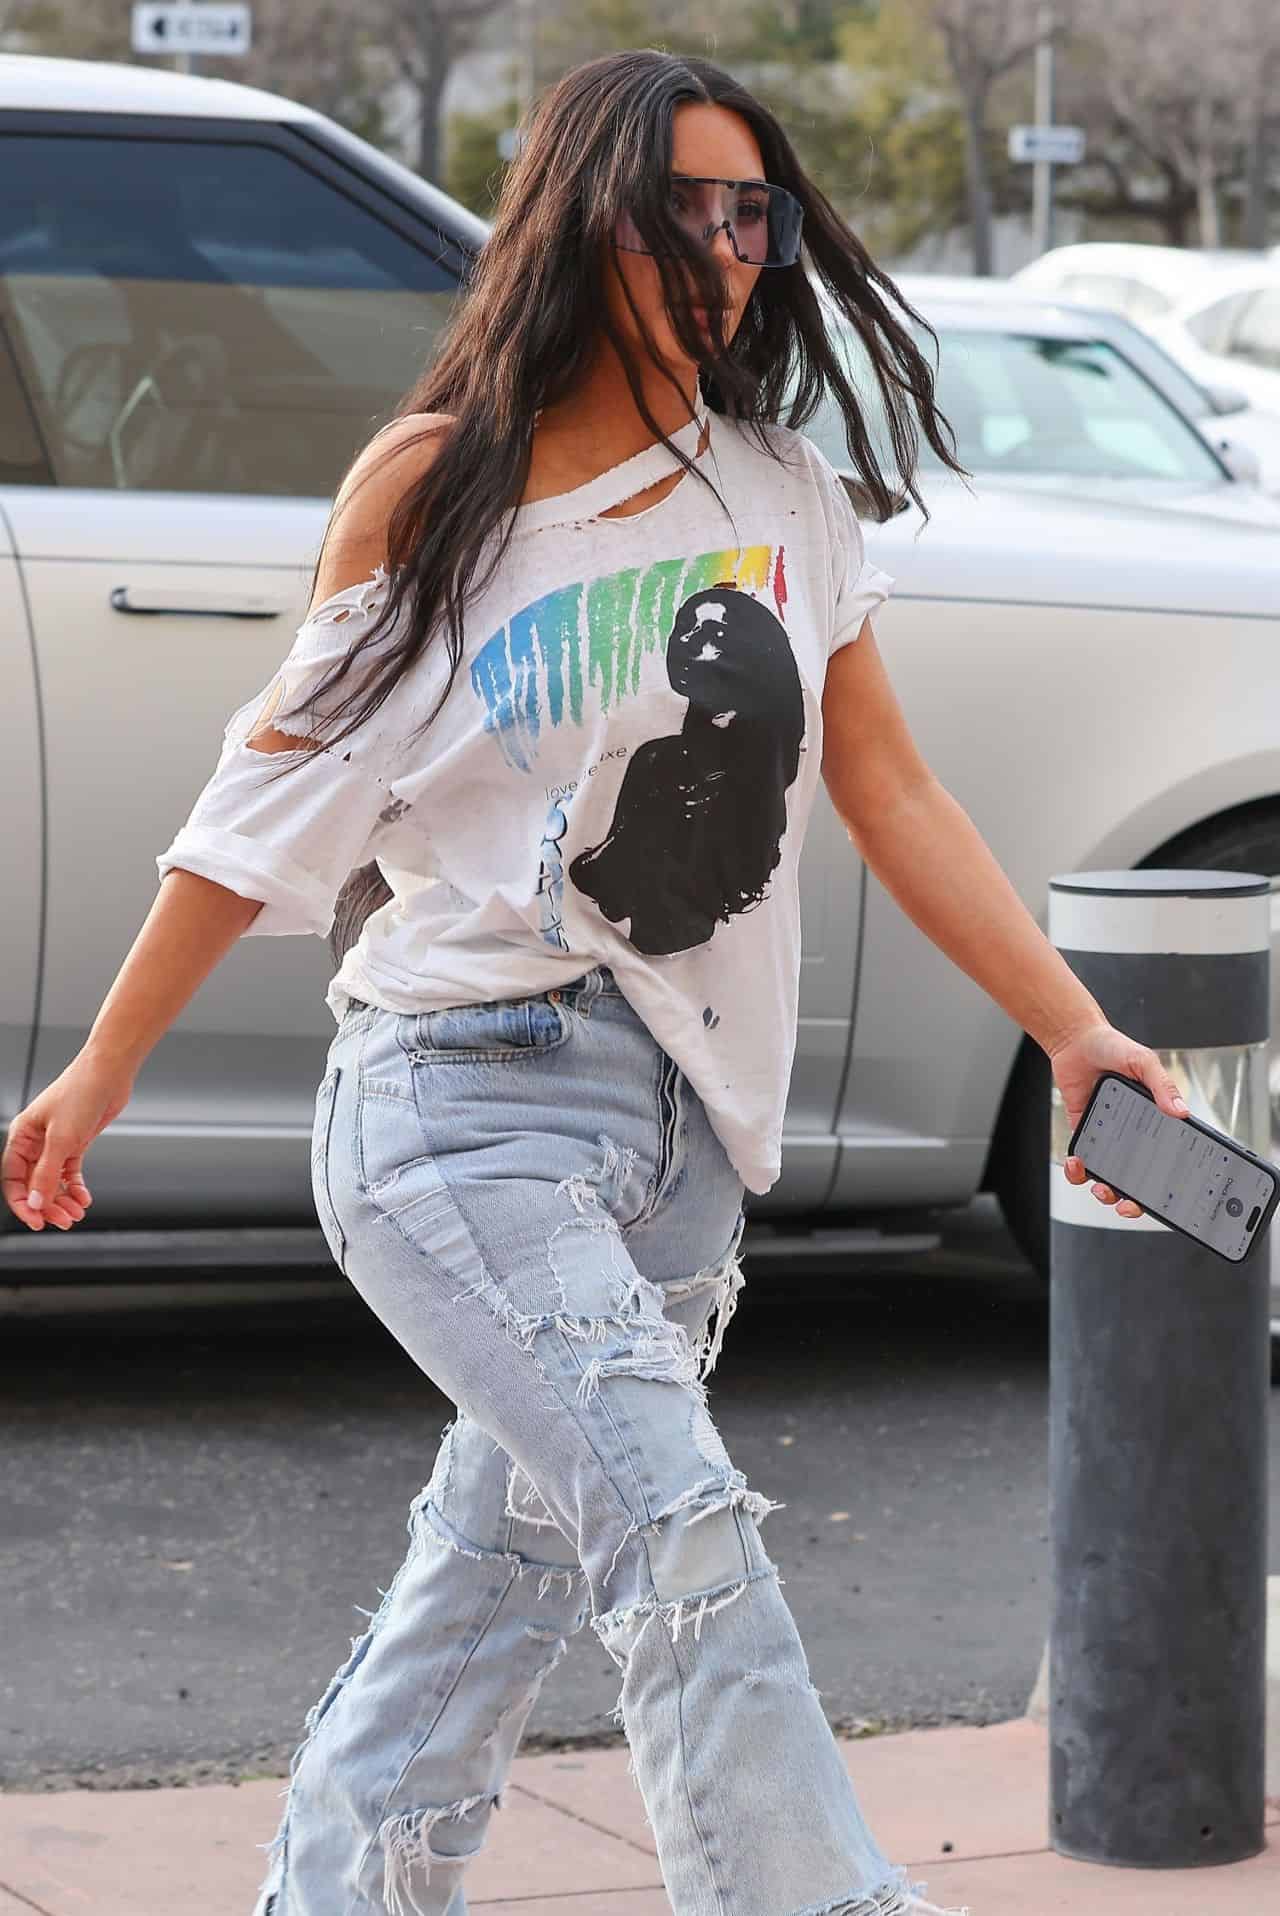 Kim Kardashian Looks Chic in a Sade T-Shirt at Saint’s Basketball Game